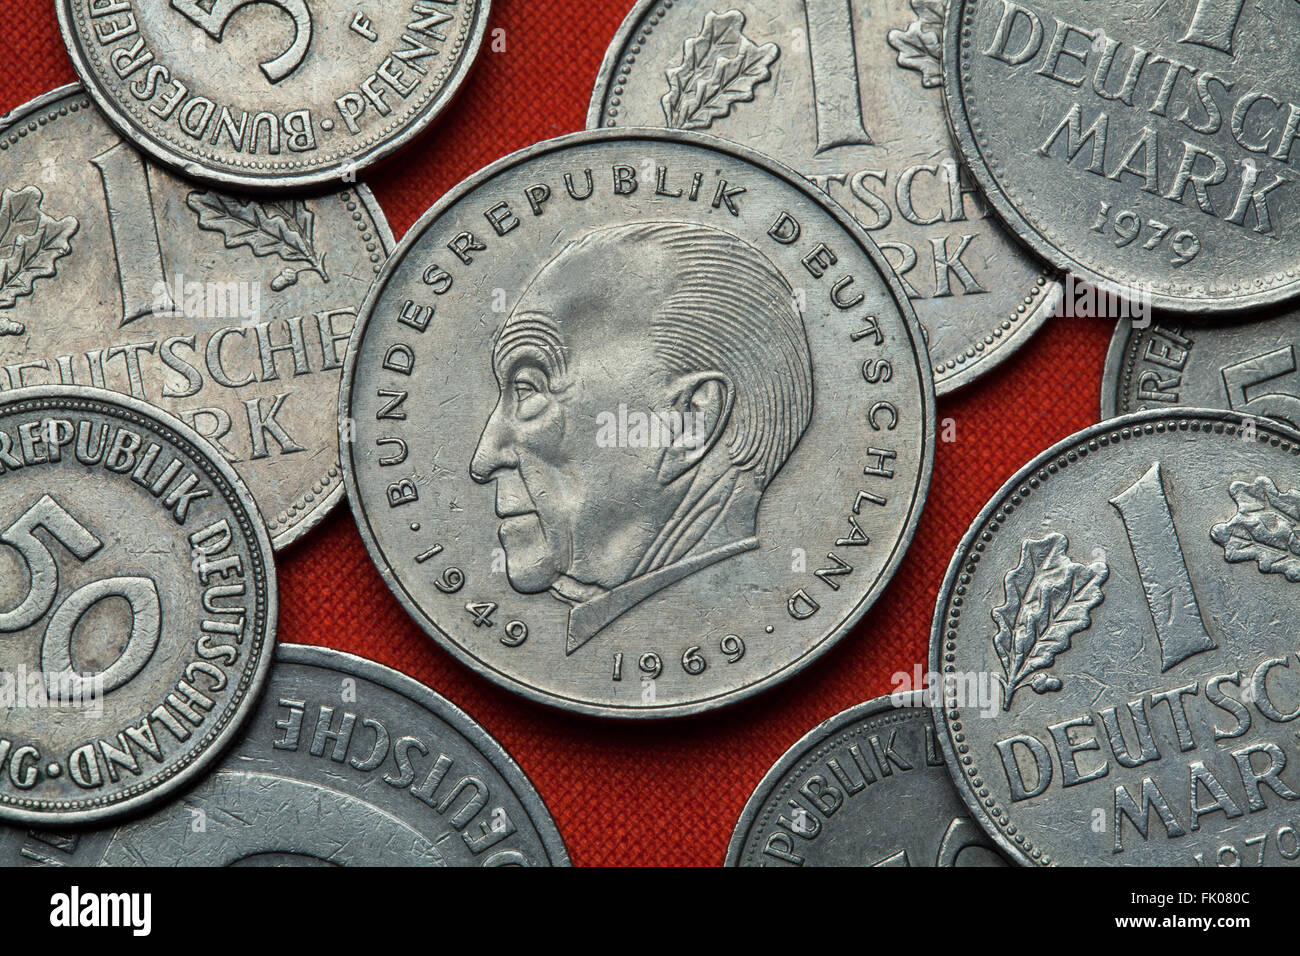 Coins of Germany. German statesman Konrad Adenauer depicted in the German two Deutsche Mark coin (1969). Stock Photo